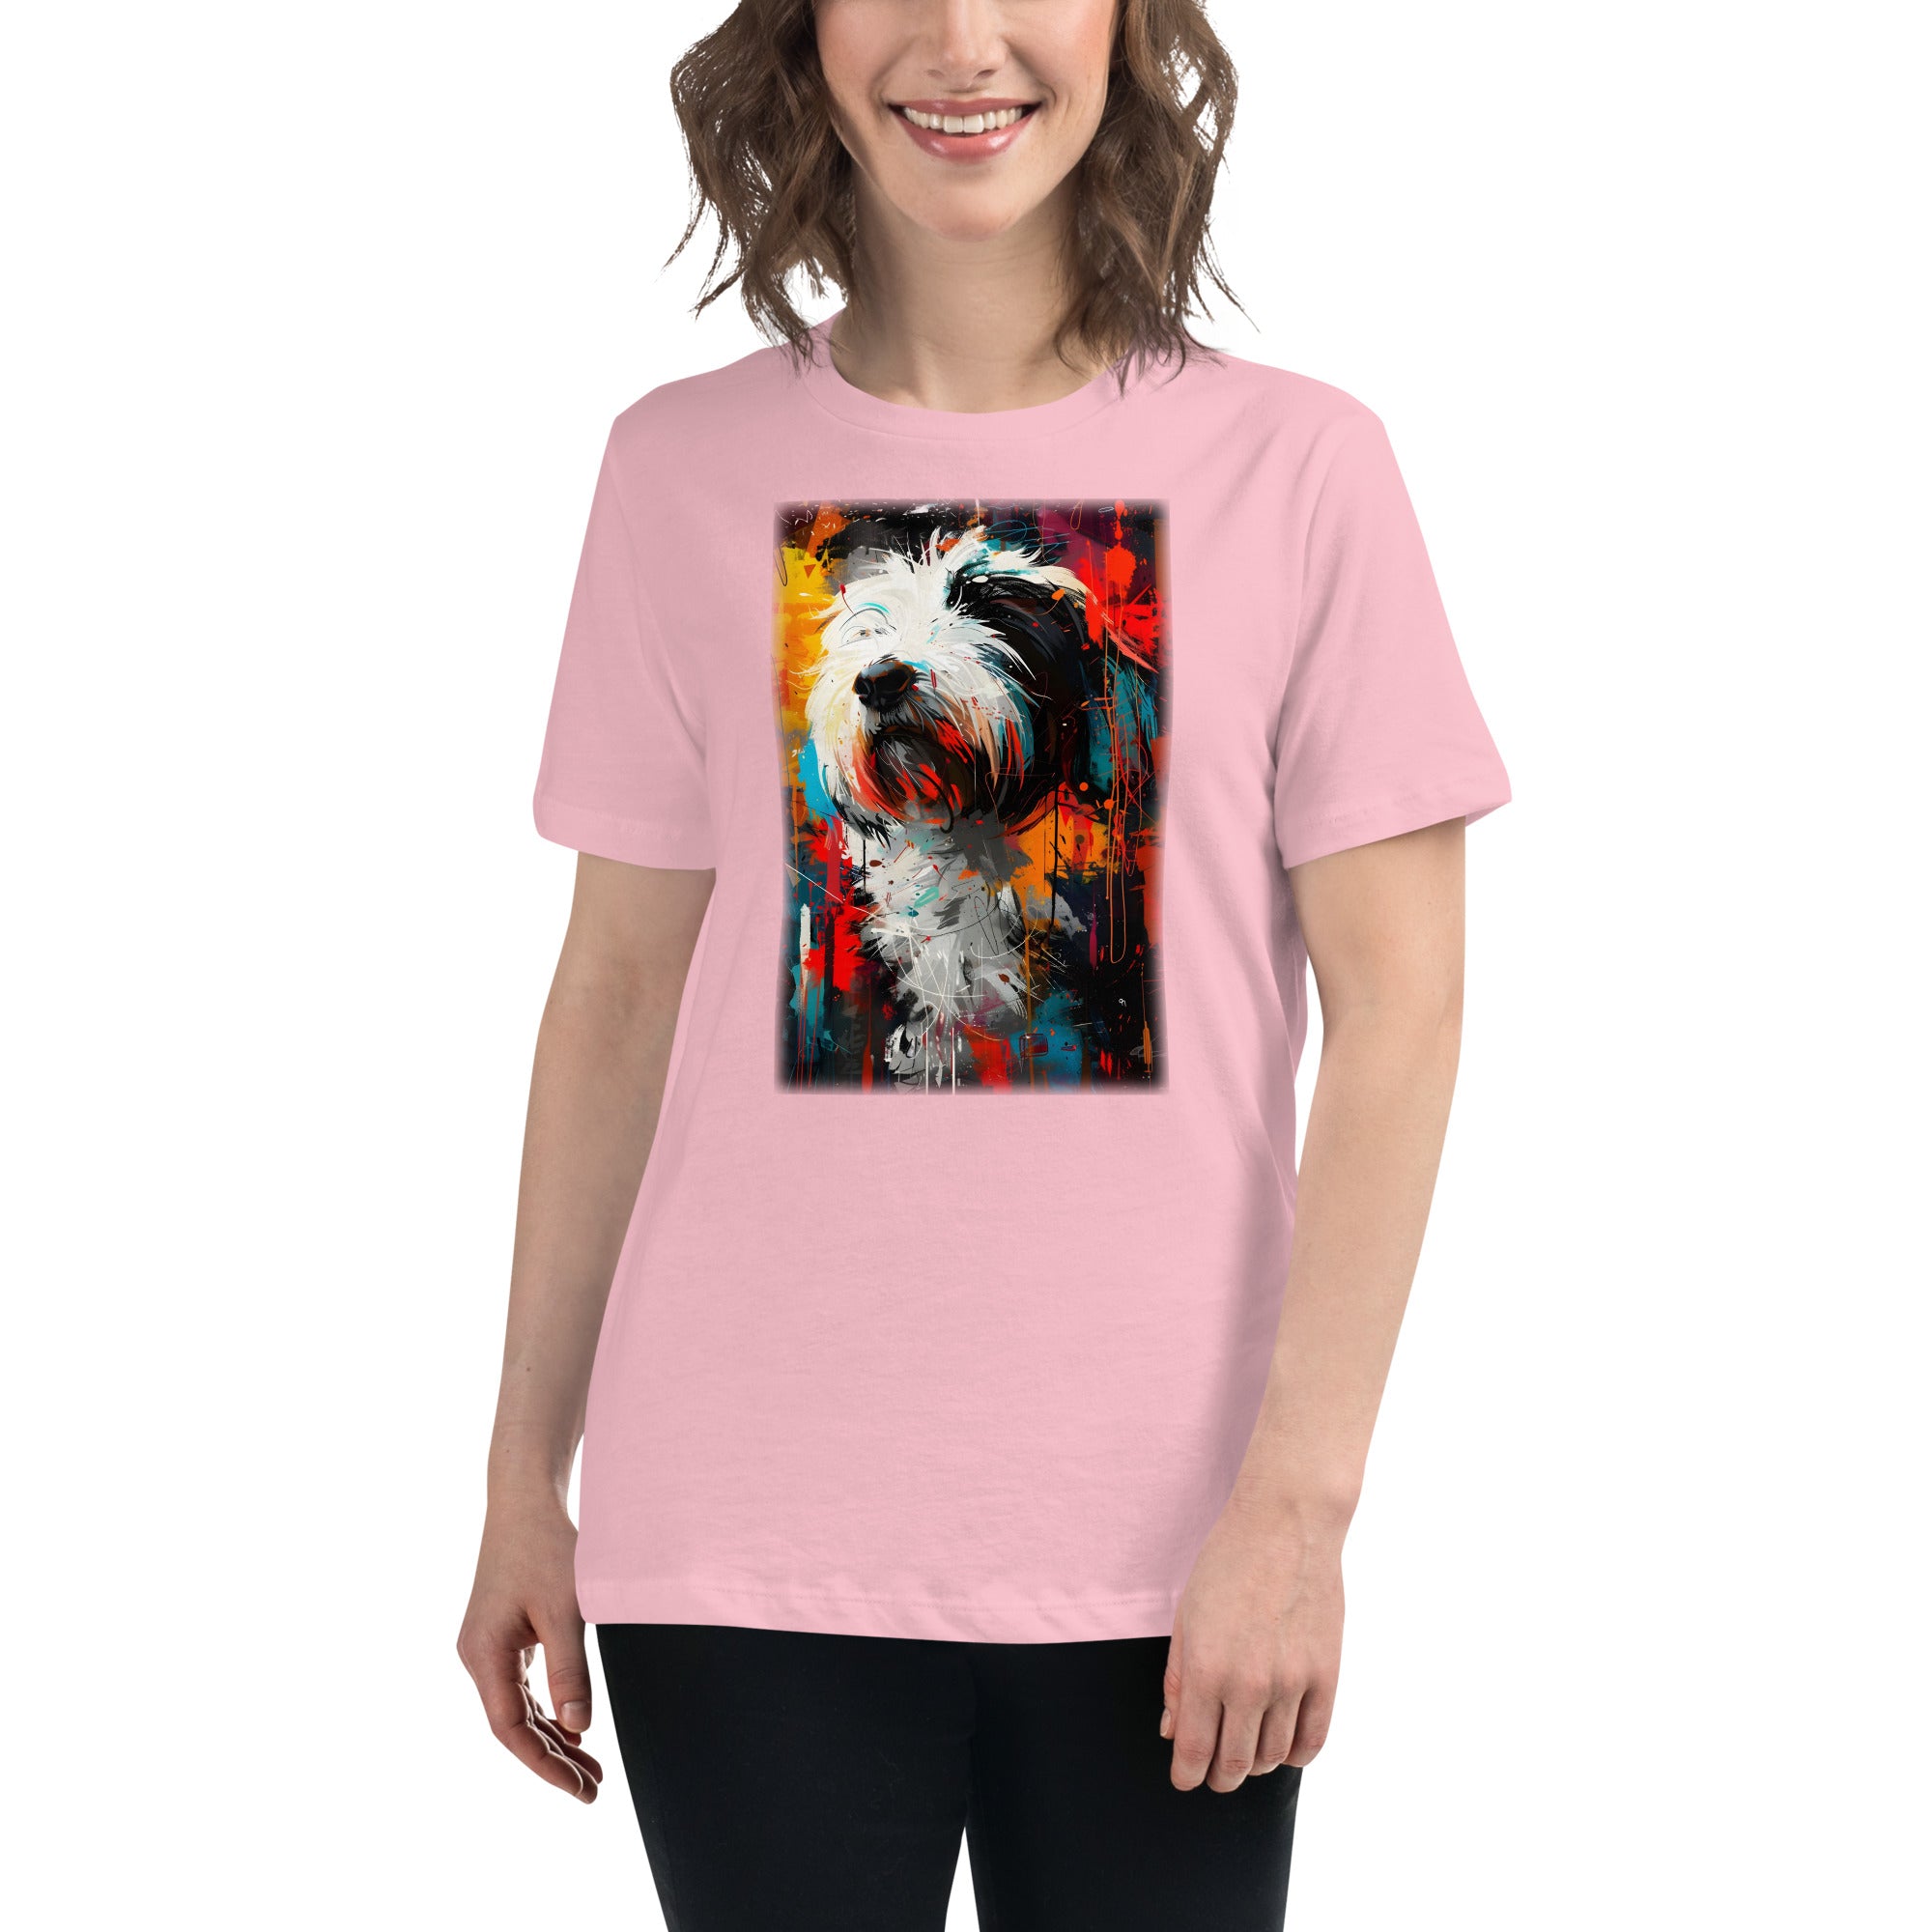 Old English Sheepdog Women's Relaxed T-Shirt